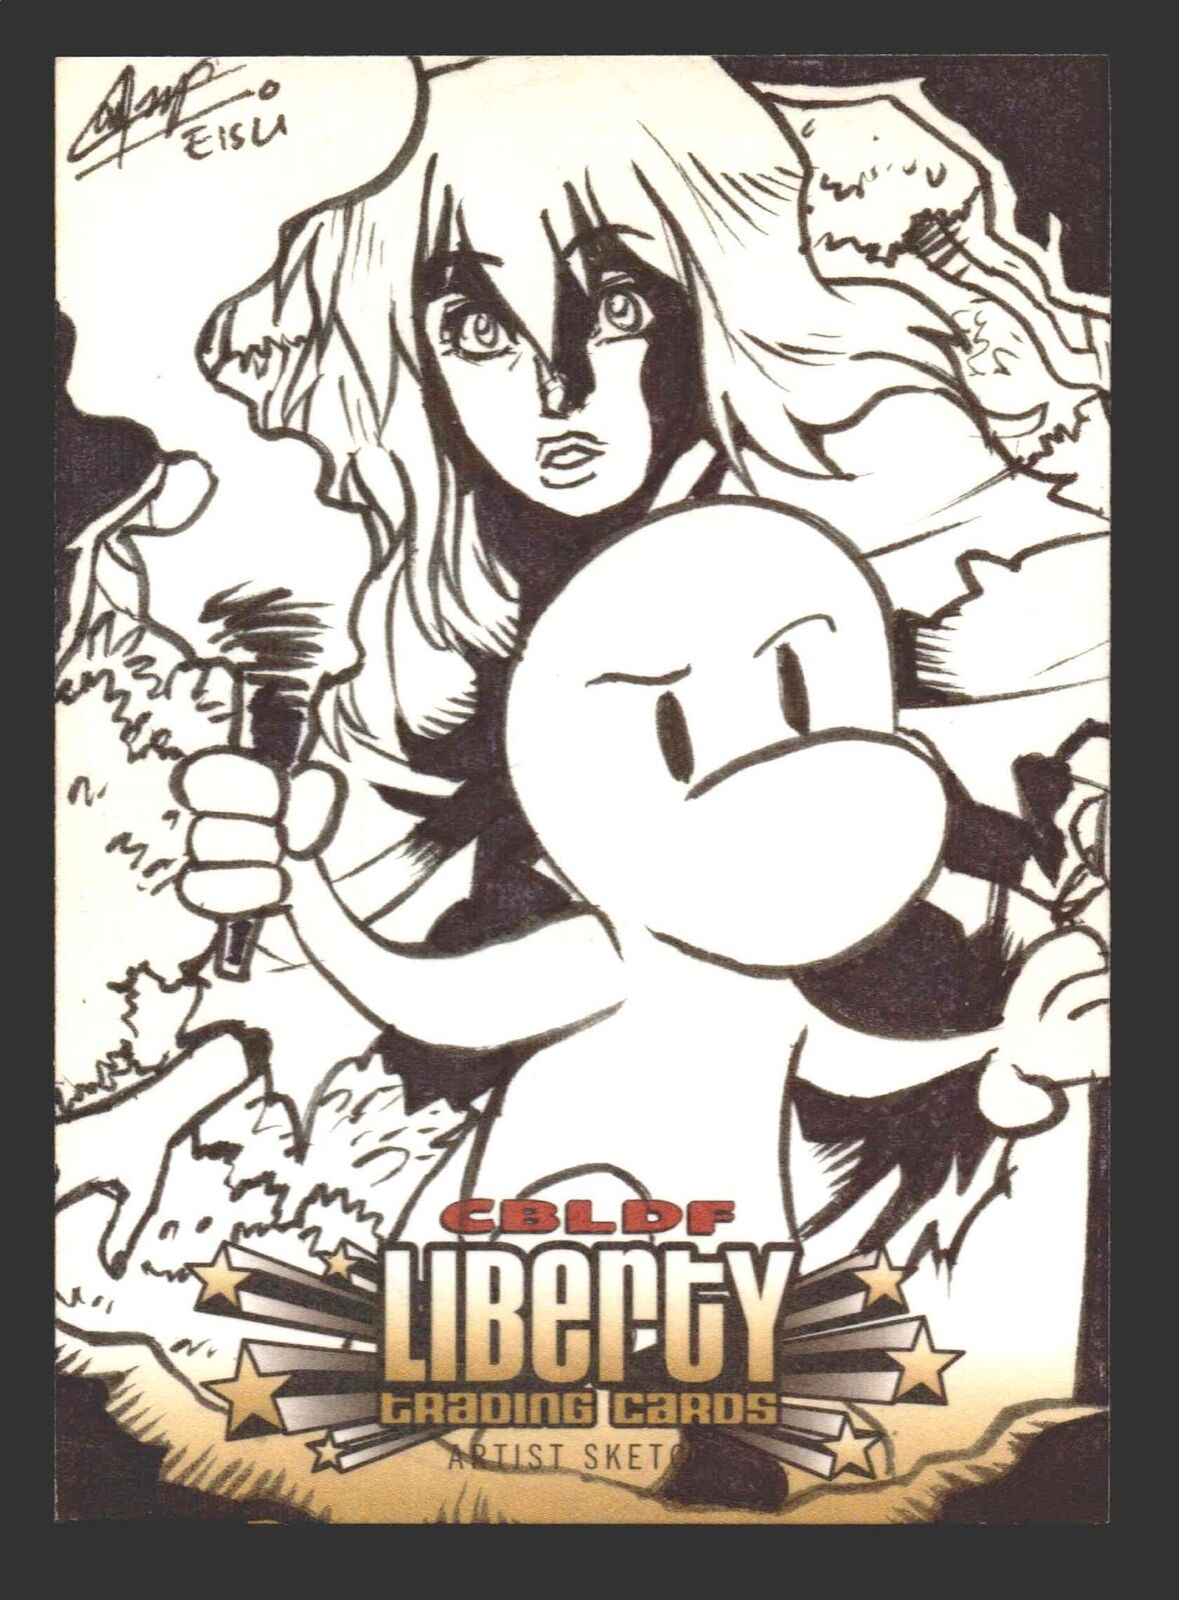 2011 Cryptozoic CBLDF Liberty Artist Sketch Card Bone by Remy \